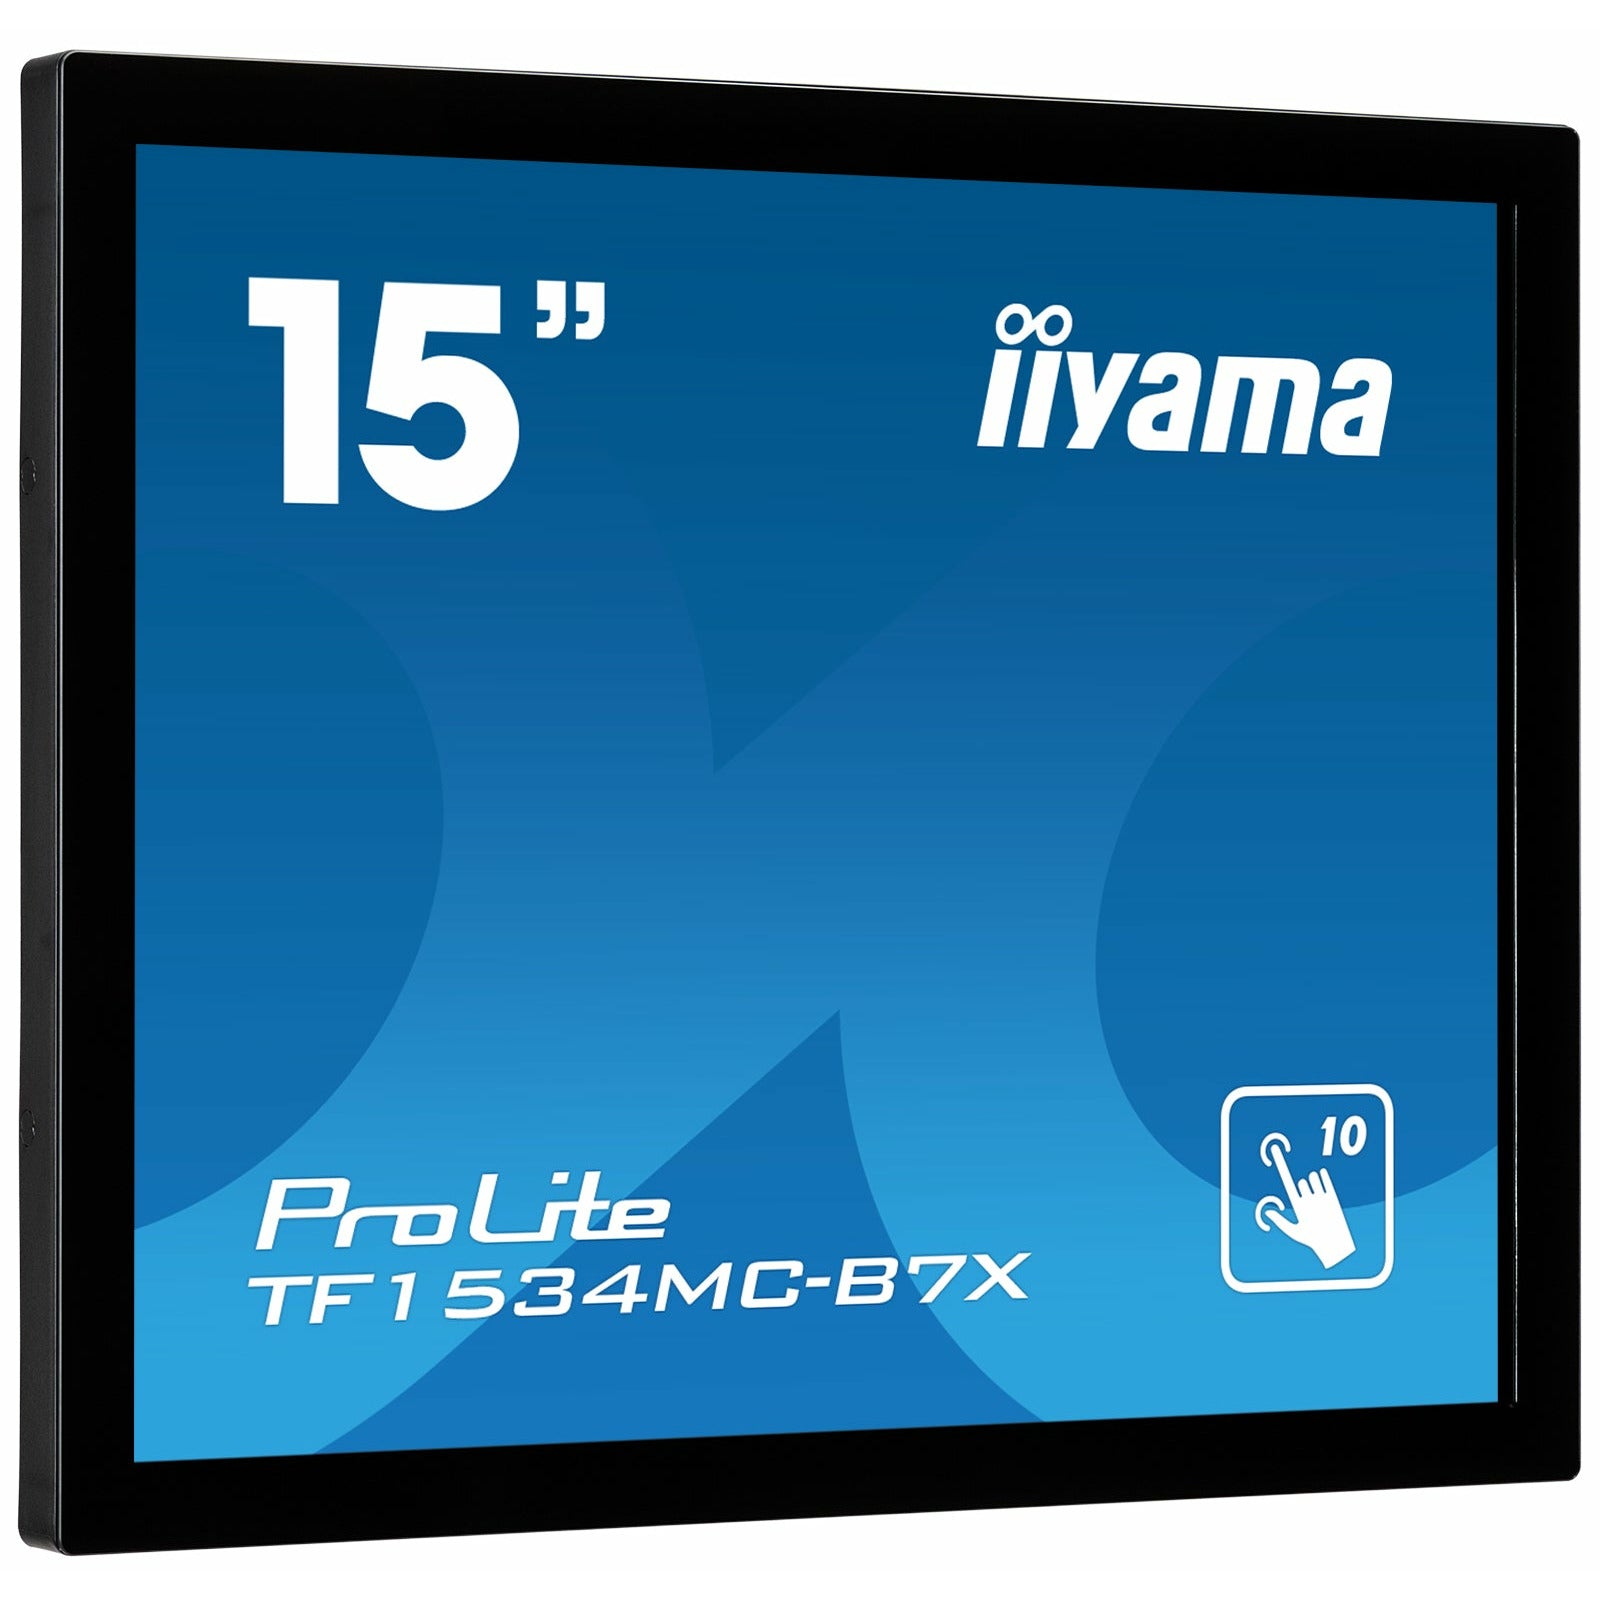 iiyama ProLite TF1534MC-B7X 15" Capacitive Touch Screen Display - image 2 of 9